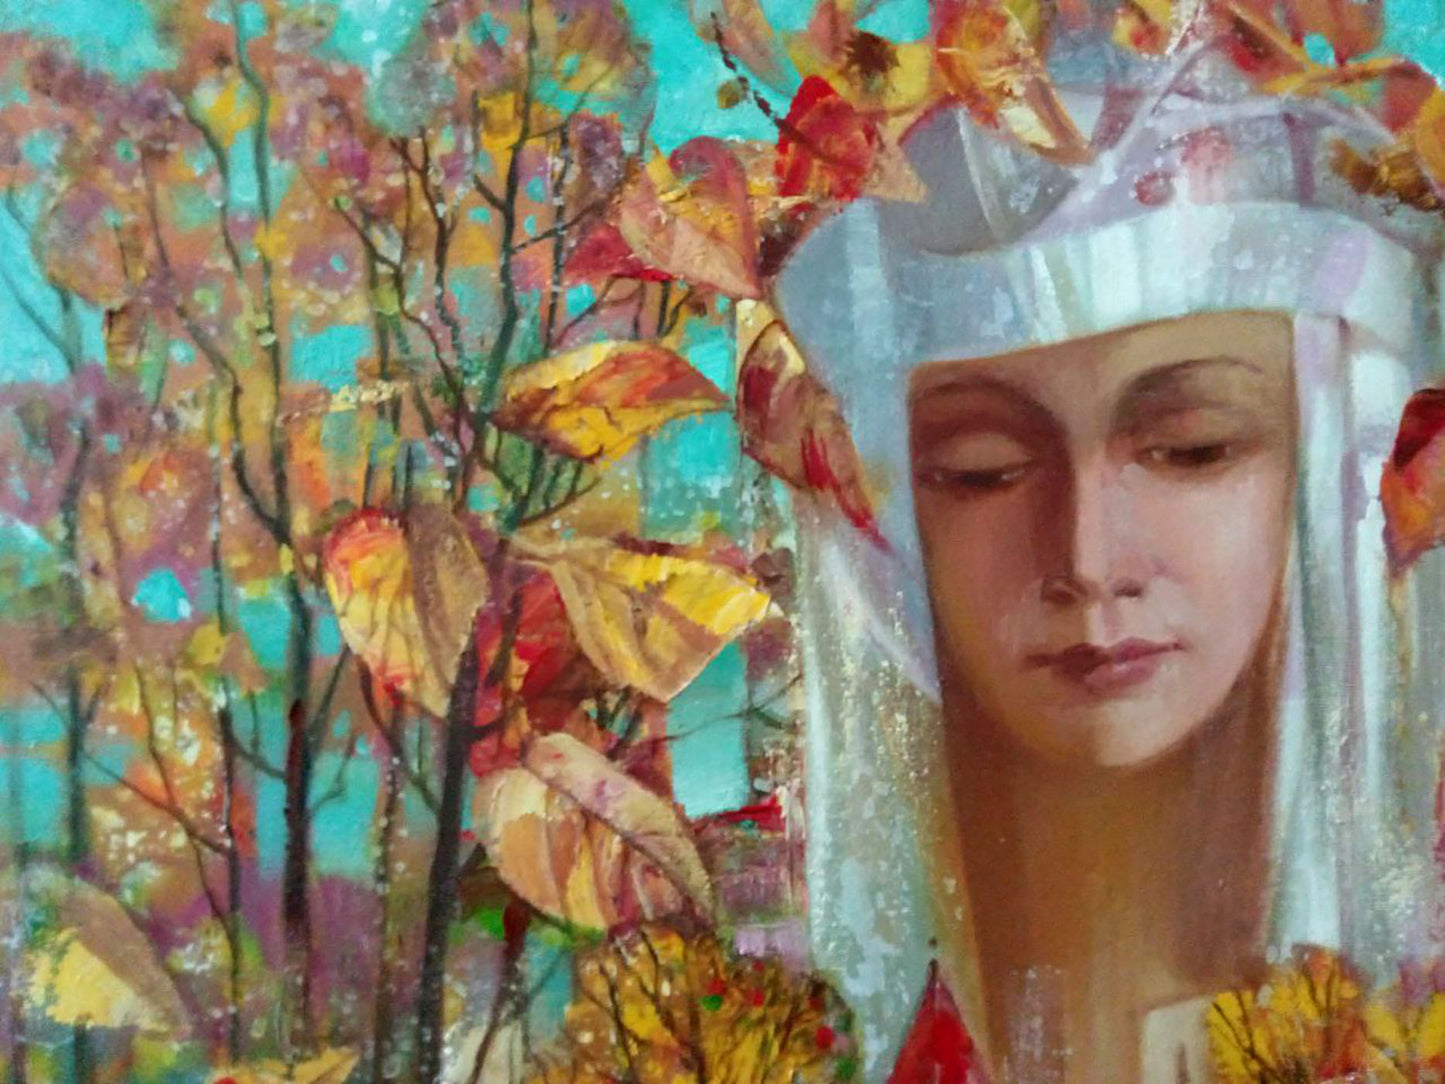 Borisovich Tarabanov's "Autumn in the City" abstract oil artwork with rich autumn hues.